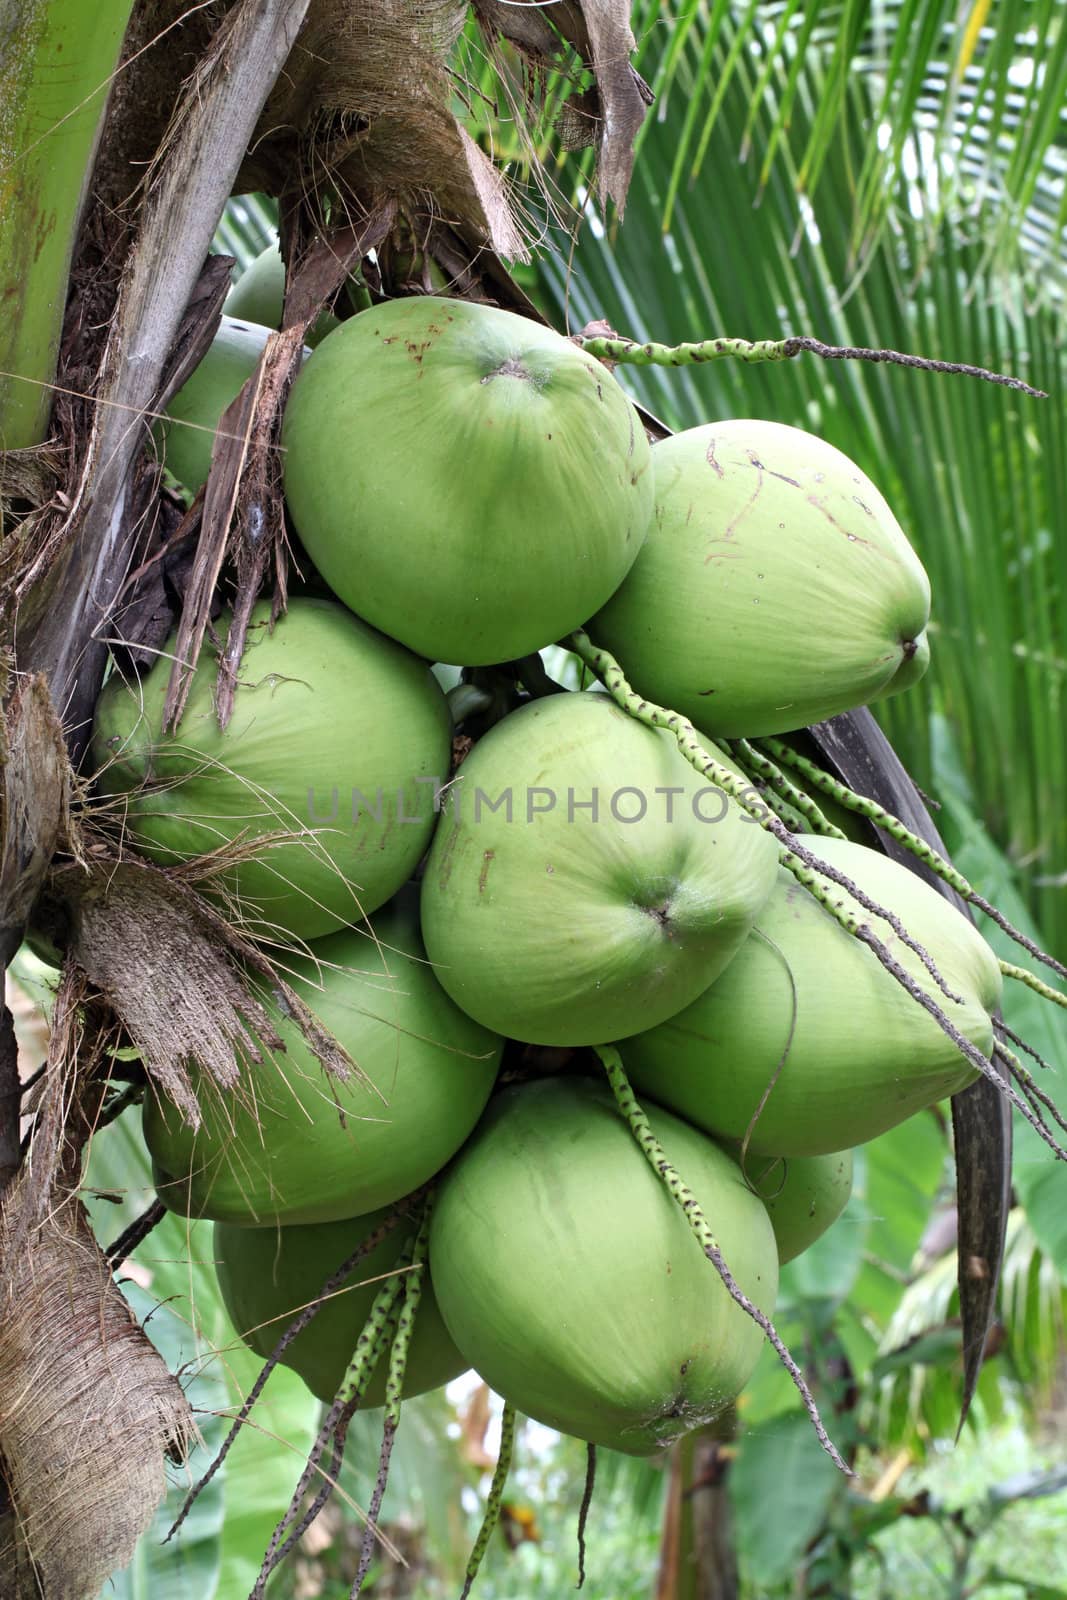 Closeup of Tropical Coconut Fruit Tree